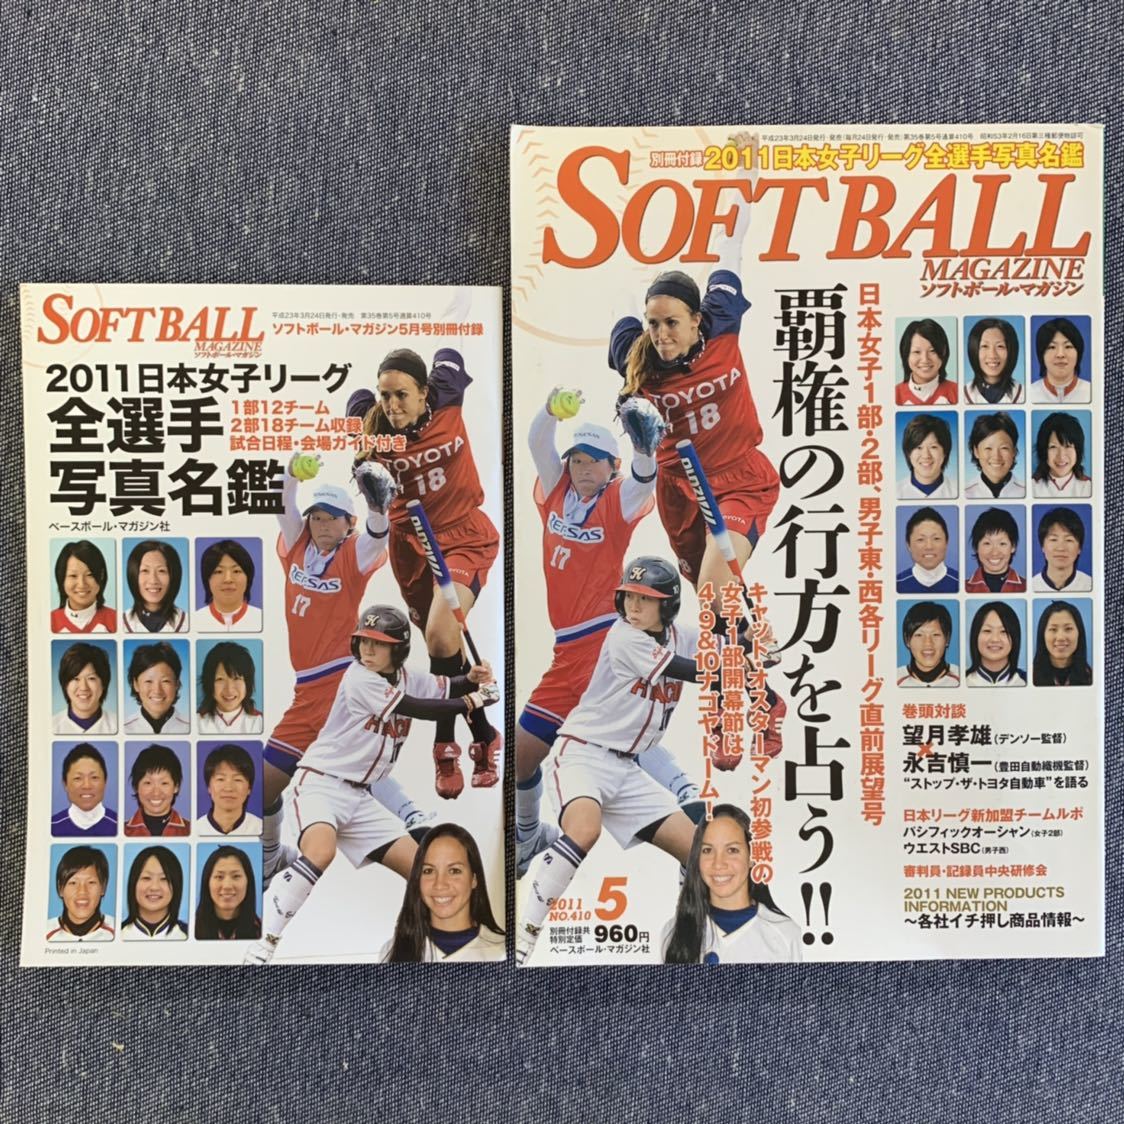  softball * magazine 2011 year 1 month ~12 month number till 12 pcs. 1 yearly amount set weekly Baseball magazine Ueno ... wistaria rice field .. Tsu tree beauty . all player photograph name .